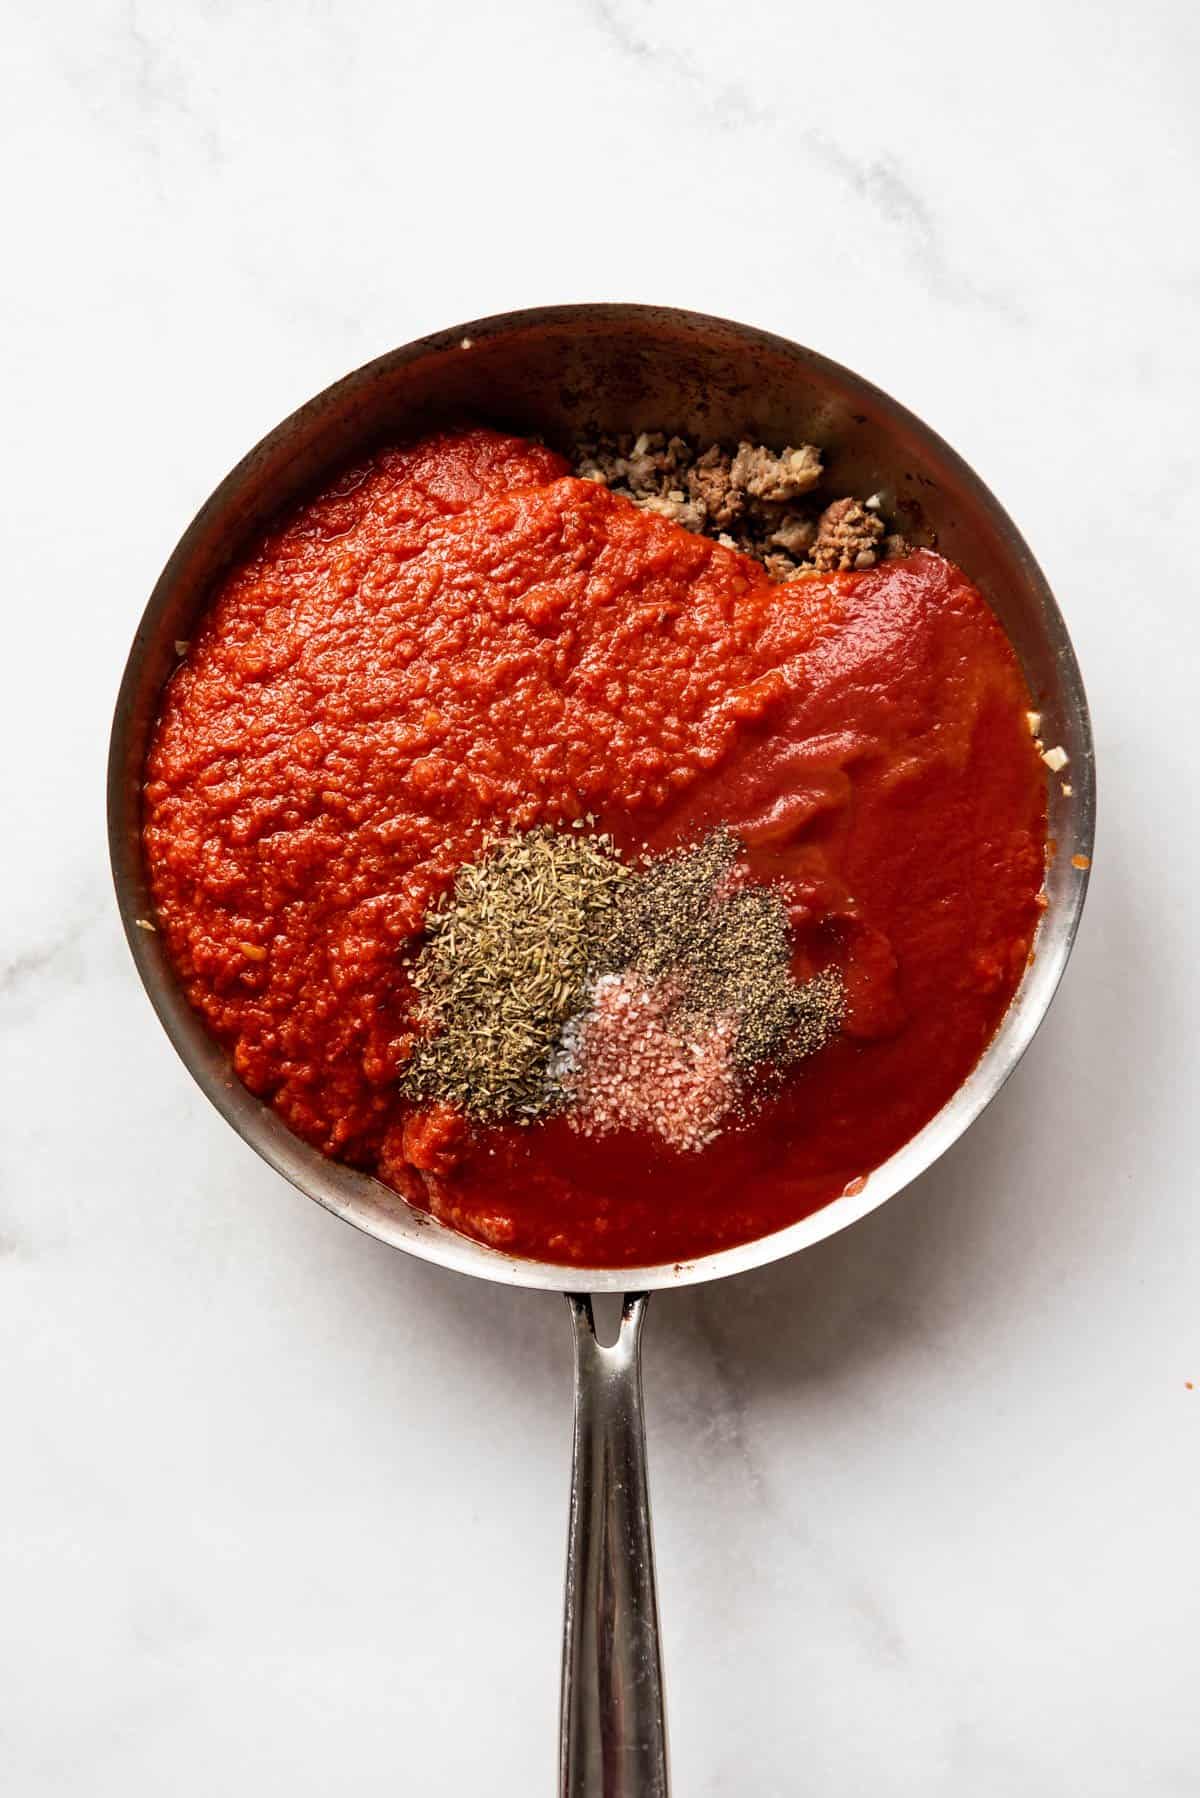 Adding marinara sauce, tomato sauce, and seasonings to browned Italian sausage in a large skillet.